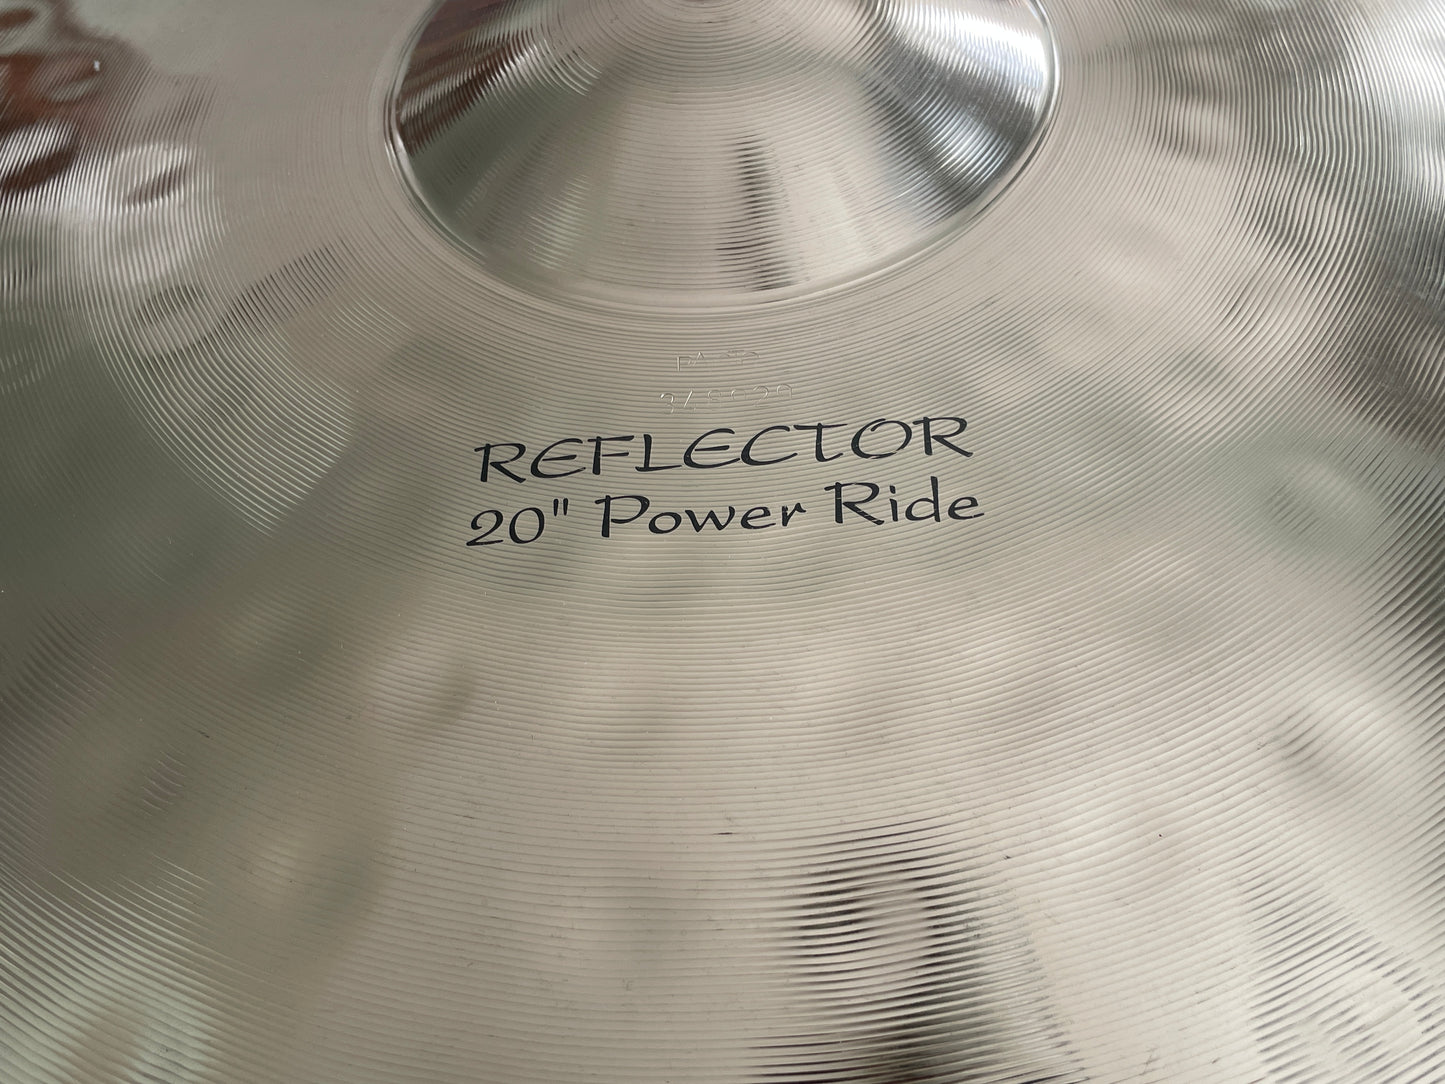 20" Paiste Sound Formula Power Ride Cymbal 2956g